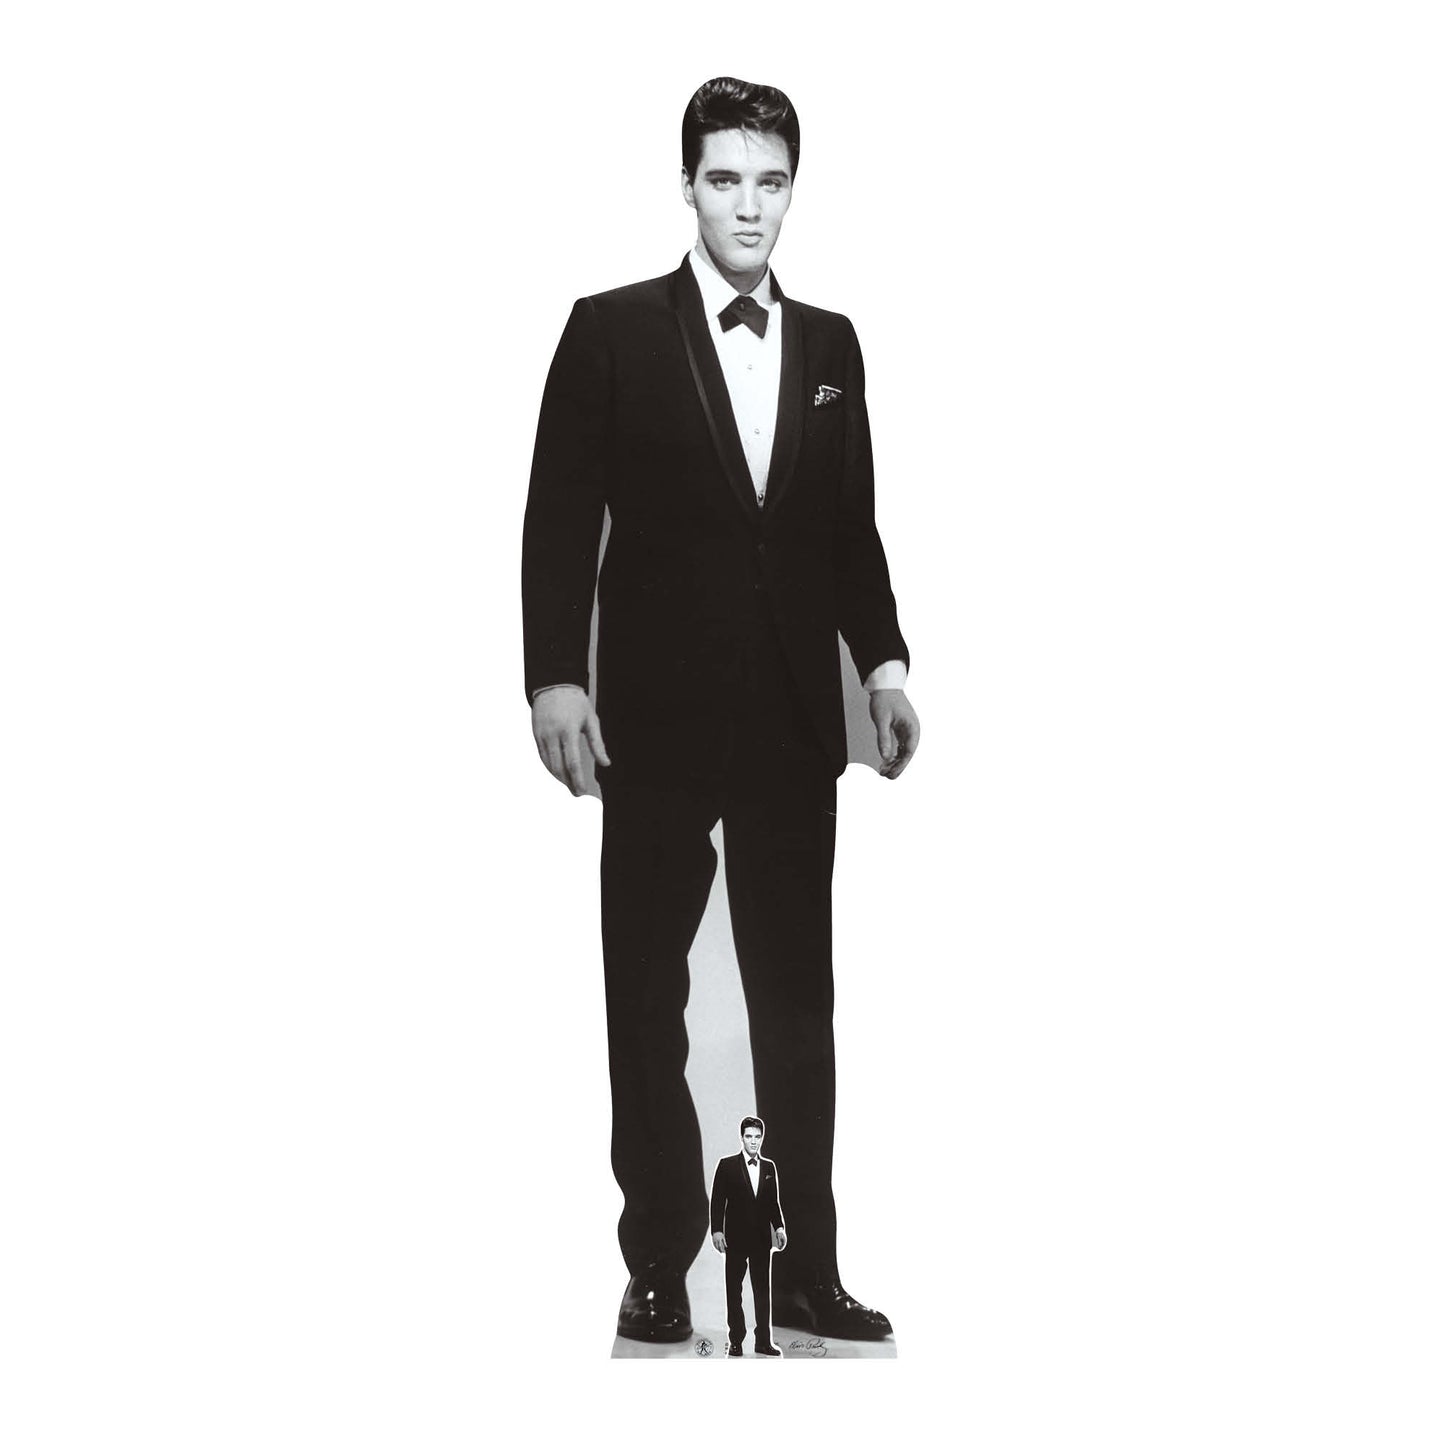 SC576 Elvis Presley Tuxedo Cardboard Cut Out Height 178cm